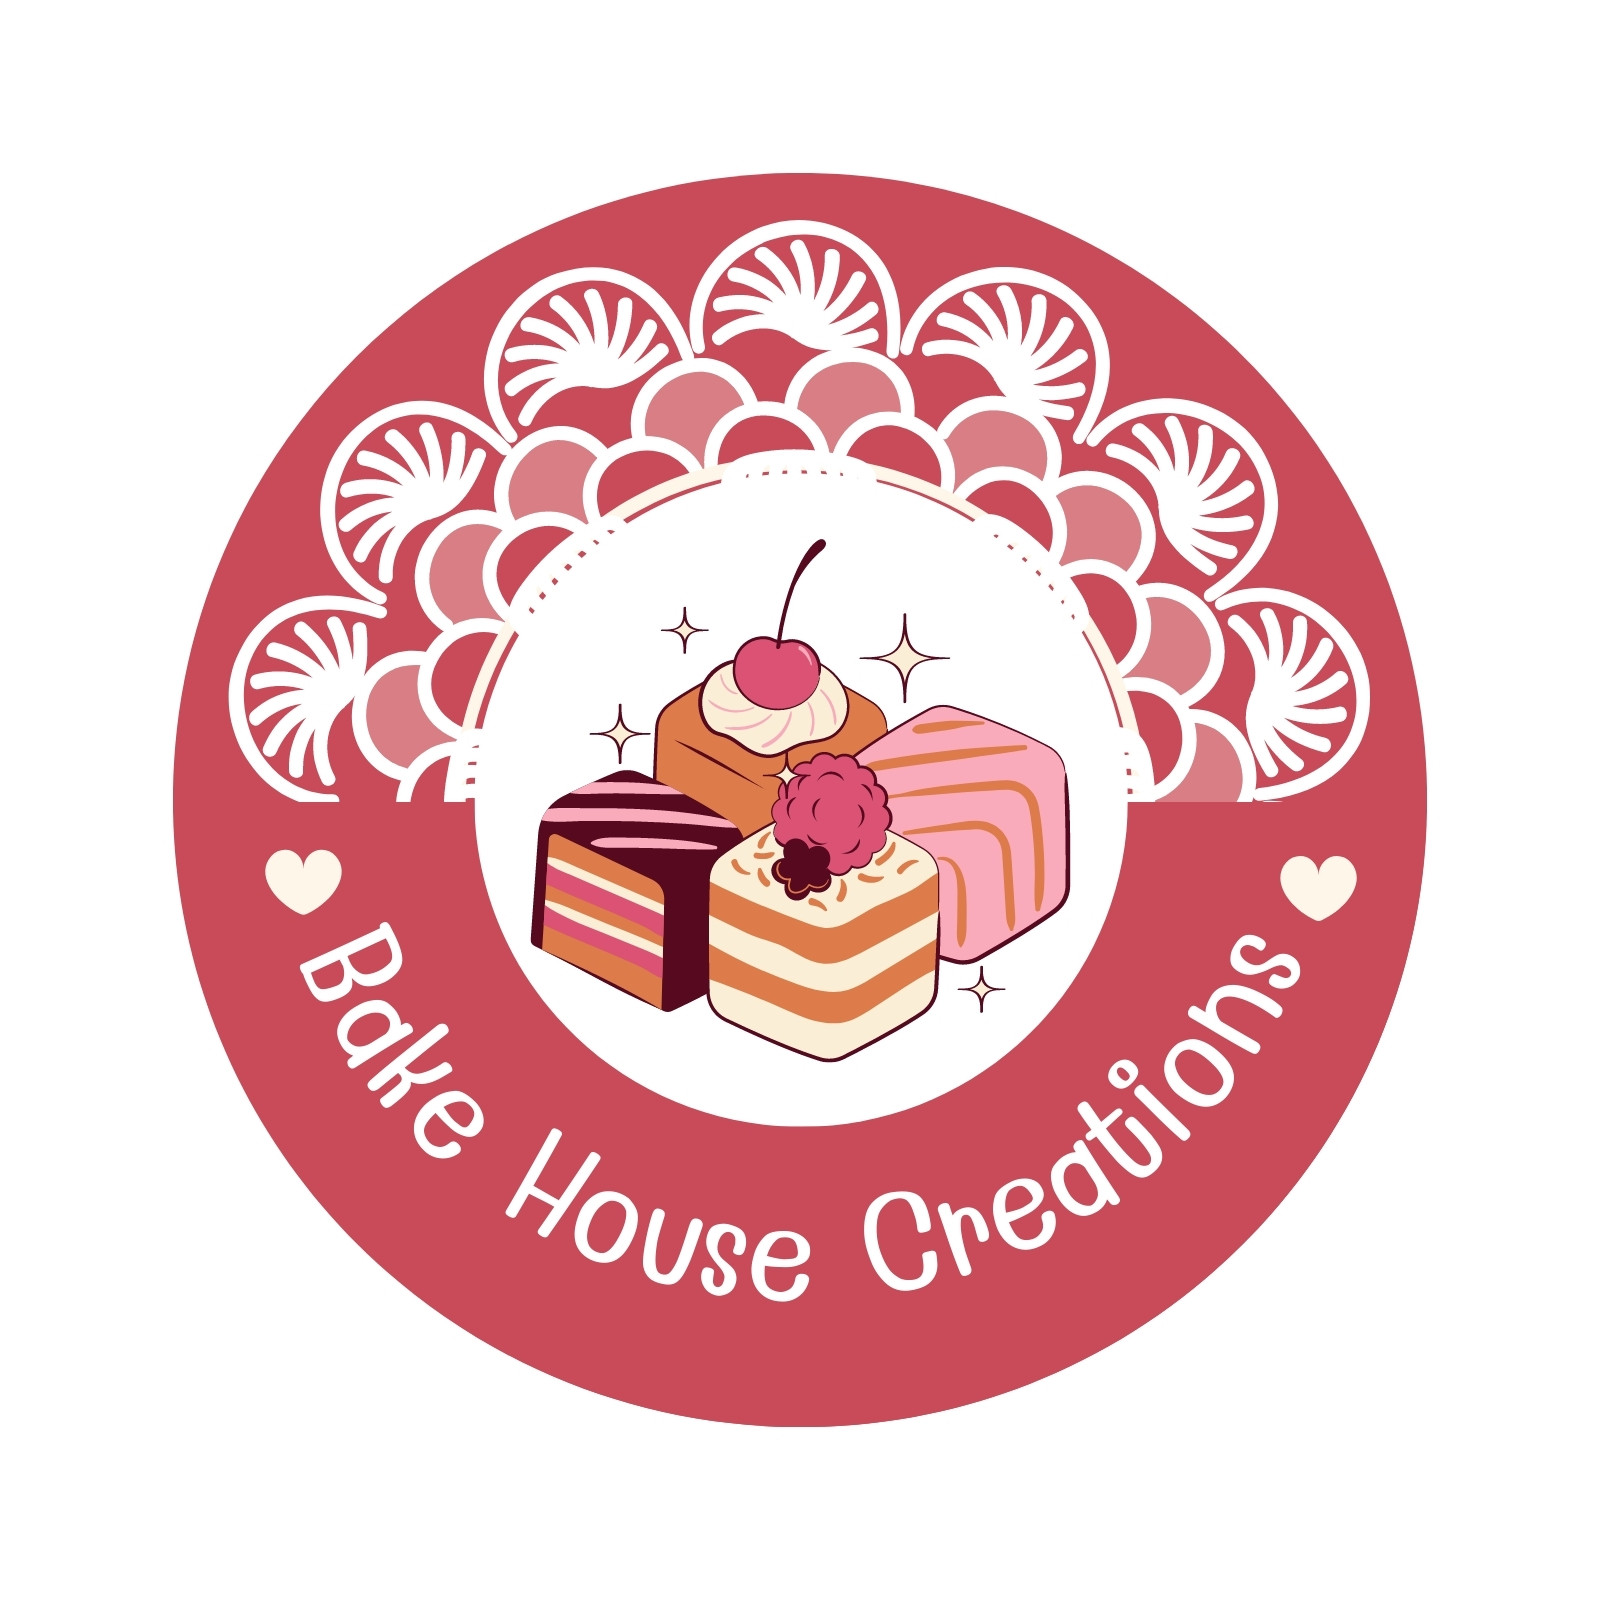 Cake house logo template design Royalty Free Vector Image